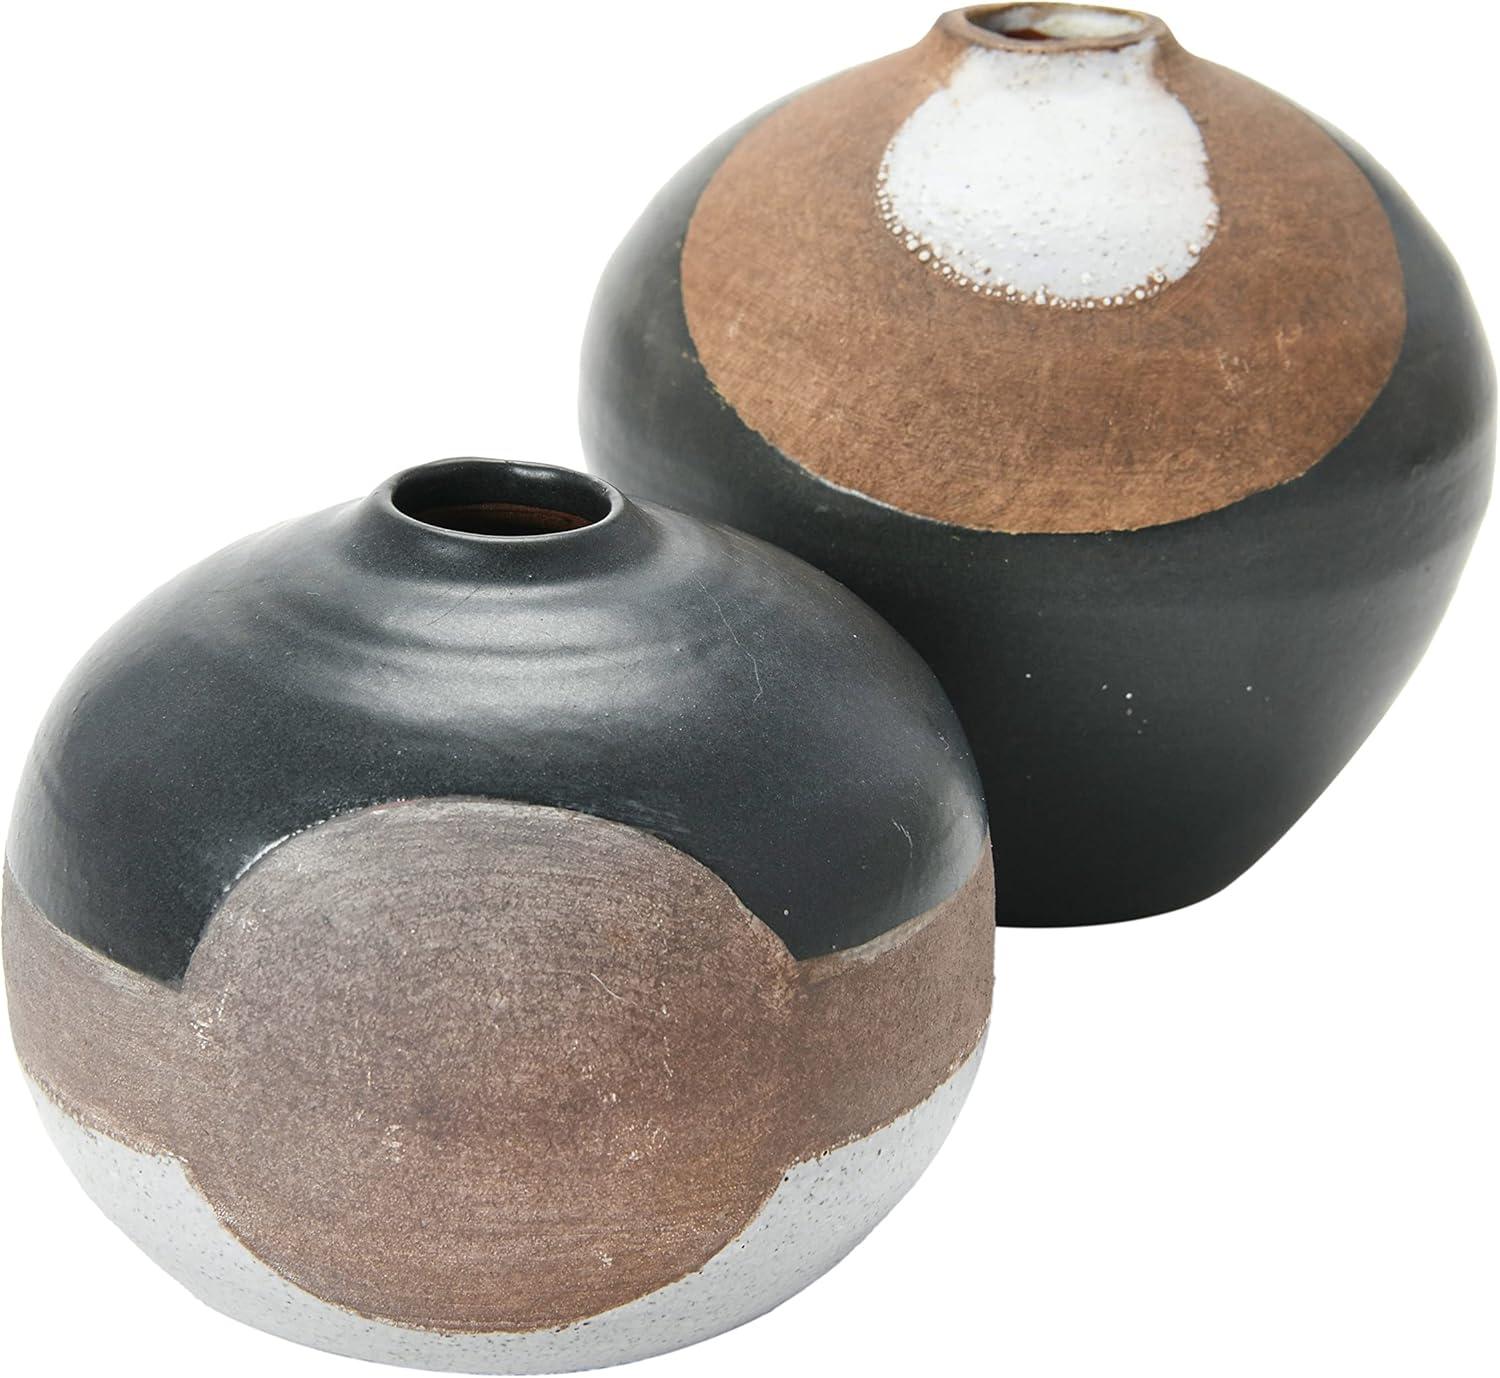 Boho Elements Multi-Colored Ceramic Vases, Set of 2